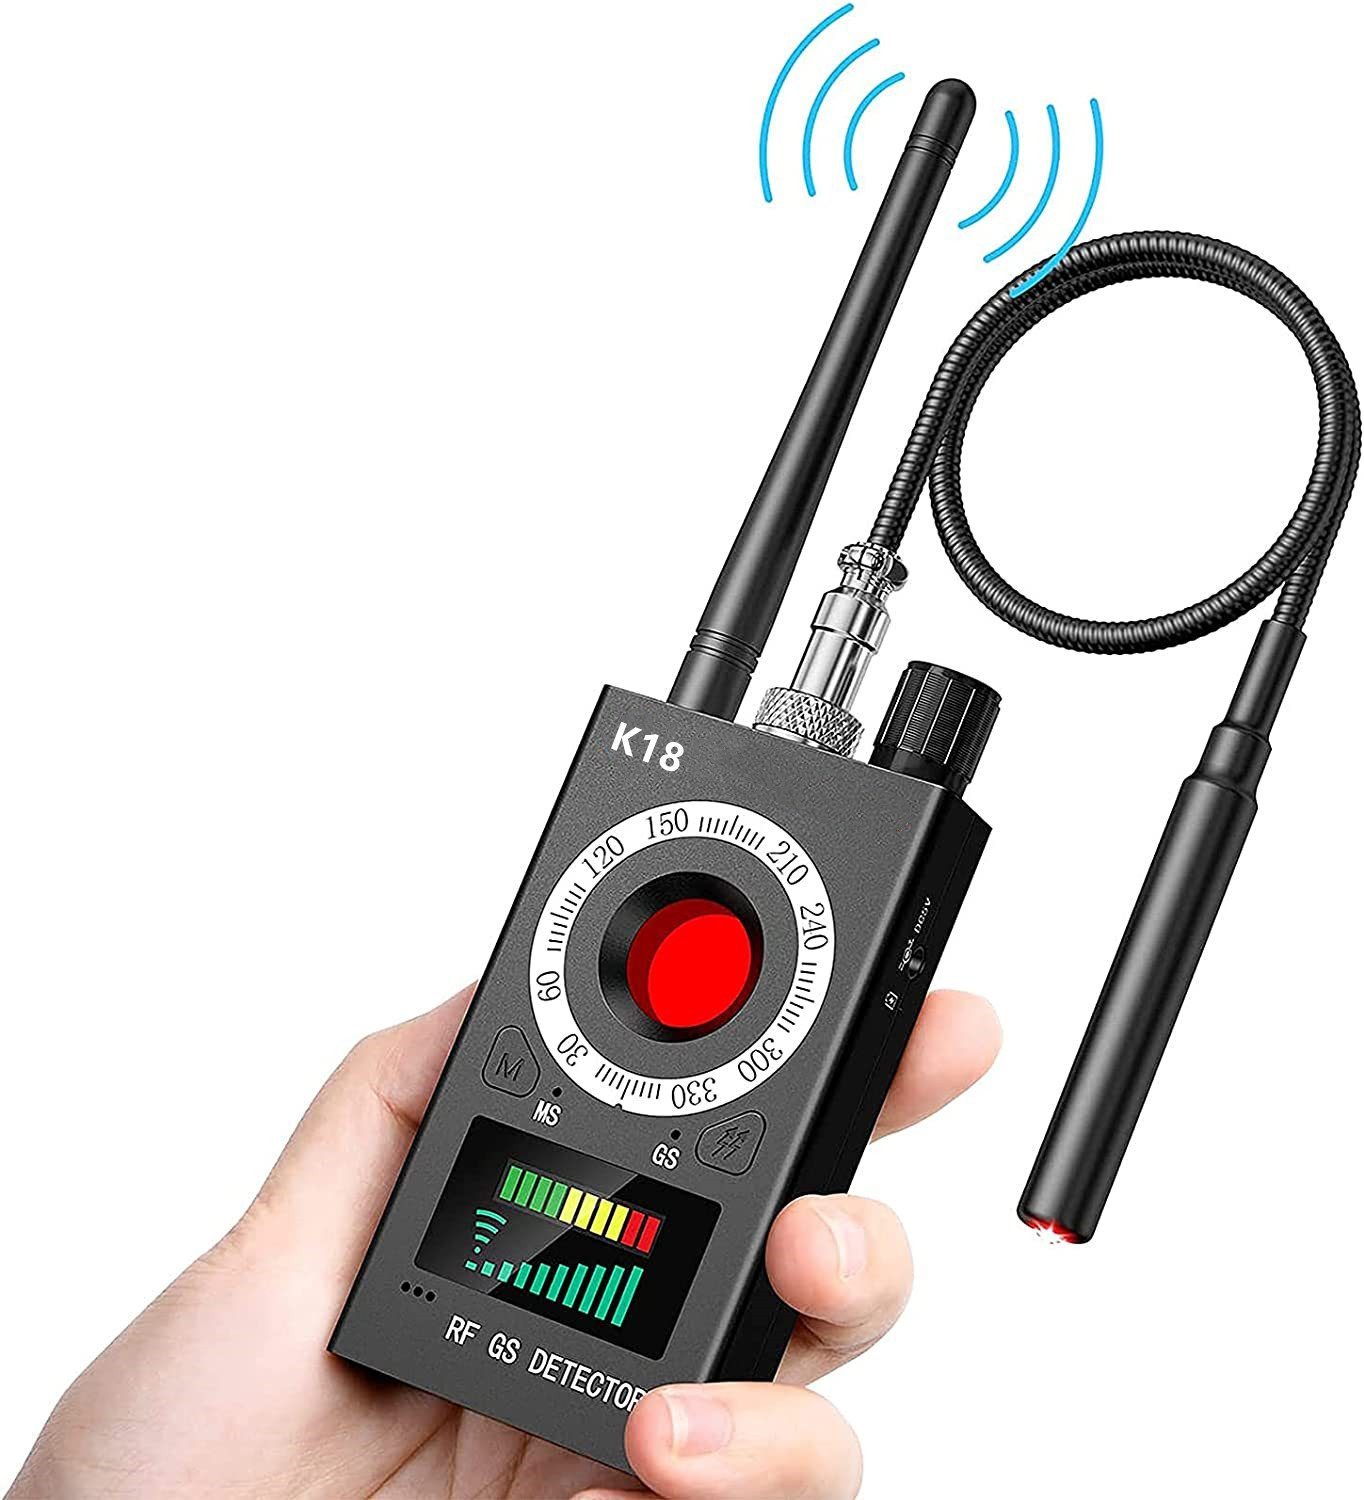 Metalldetektor Spy,GSM autolock Multifunktion RF Tracker Wanzfinder, Detektor -RF-Signal/Magnetfeld/Kamera-Objektiv/Kamera-Erkennung Wireless,Wanzendetektor,GPS